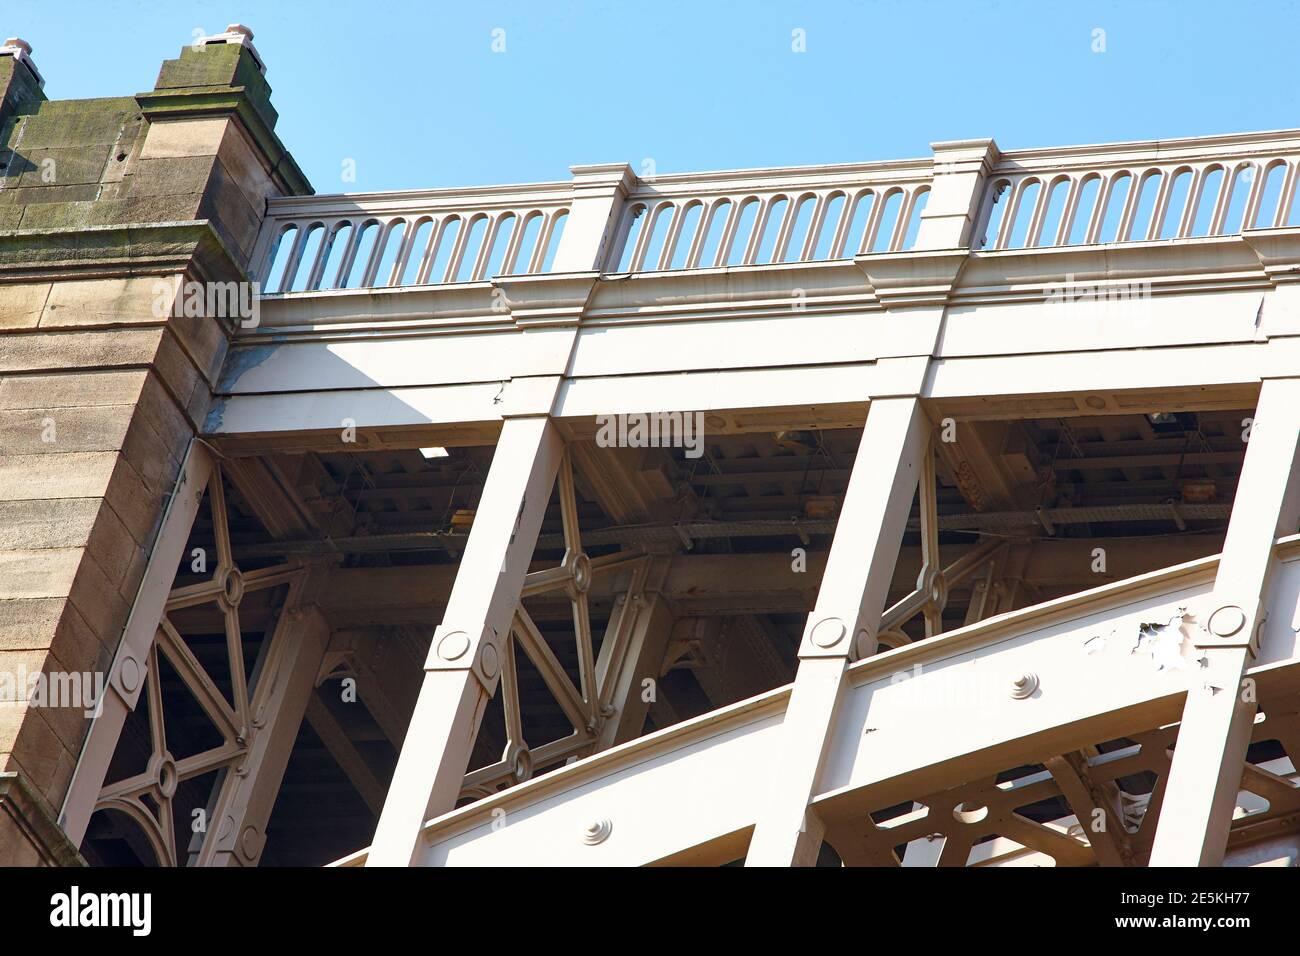 High Level Bridge, Newcastle Upon Tyne, Tyneside, Inghilterra nord-orientale, Regno Unito Foto Stock